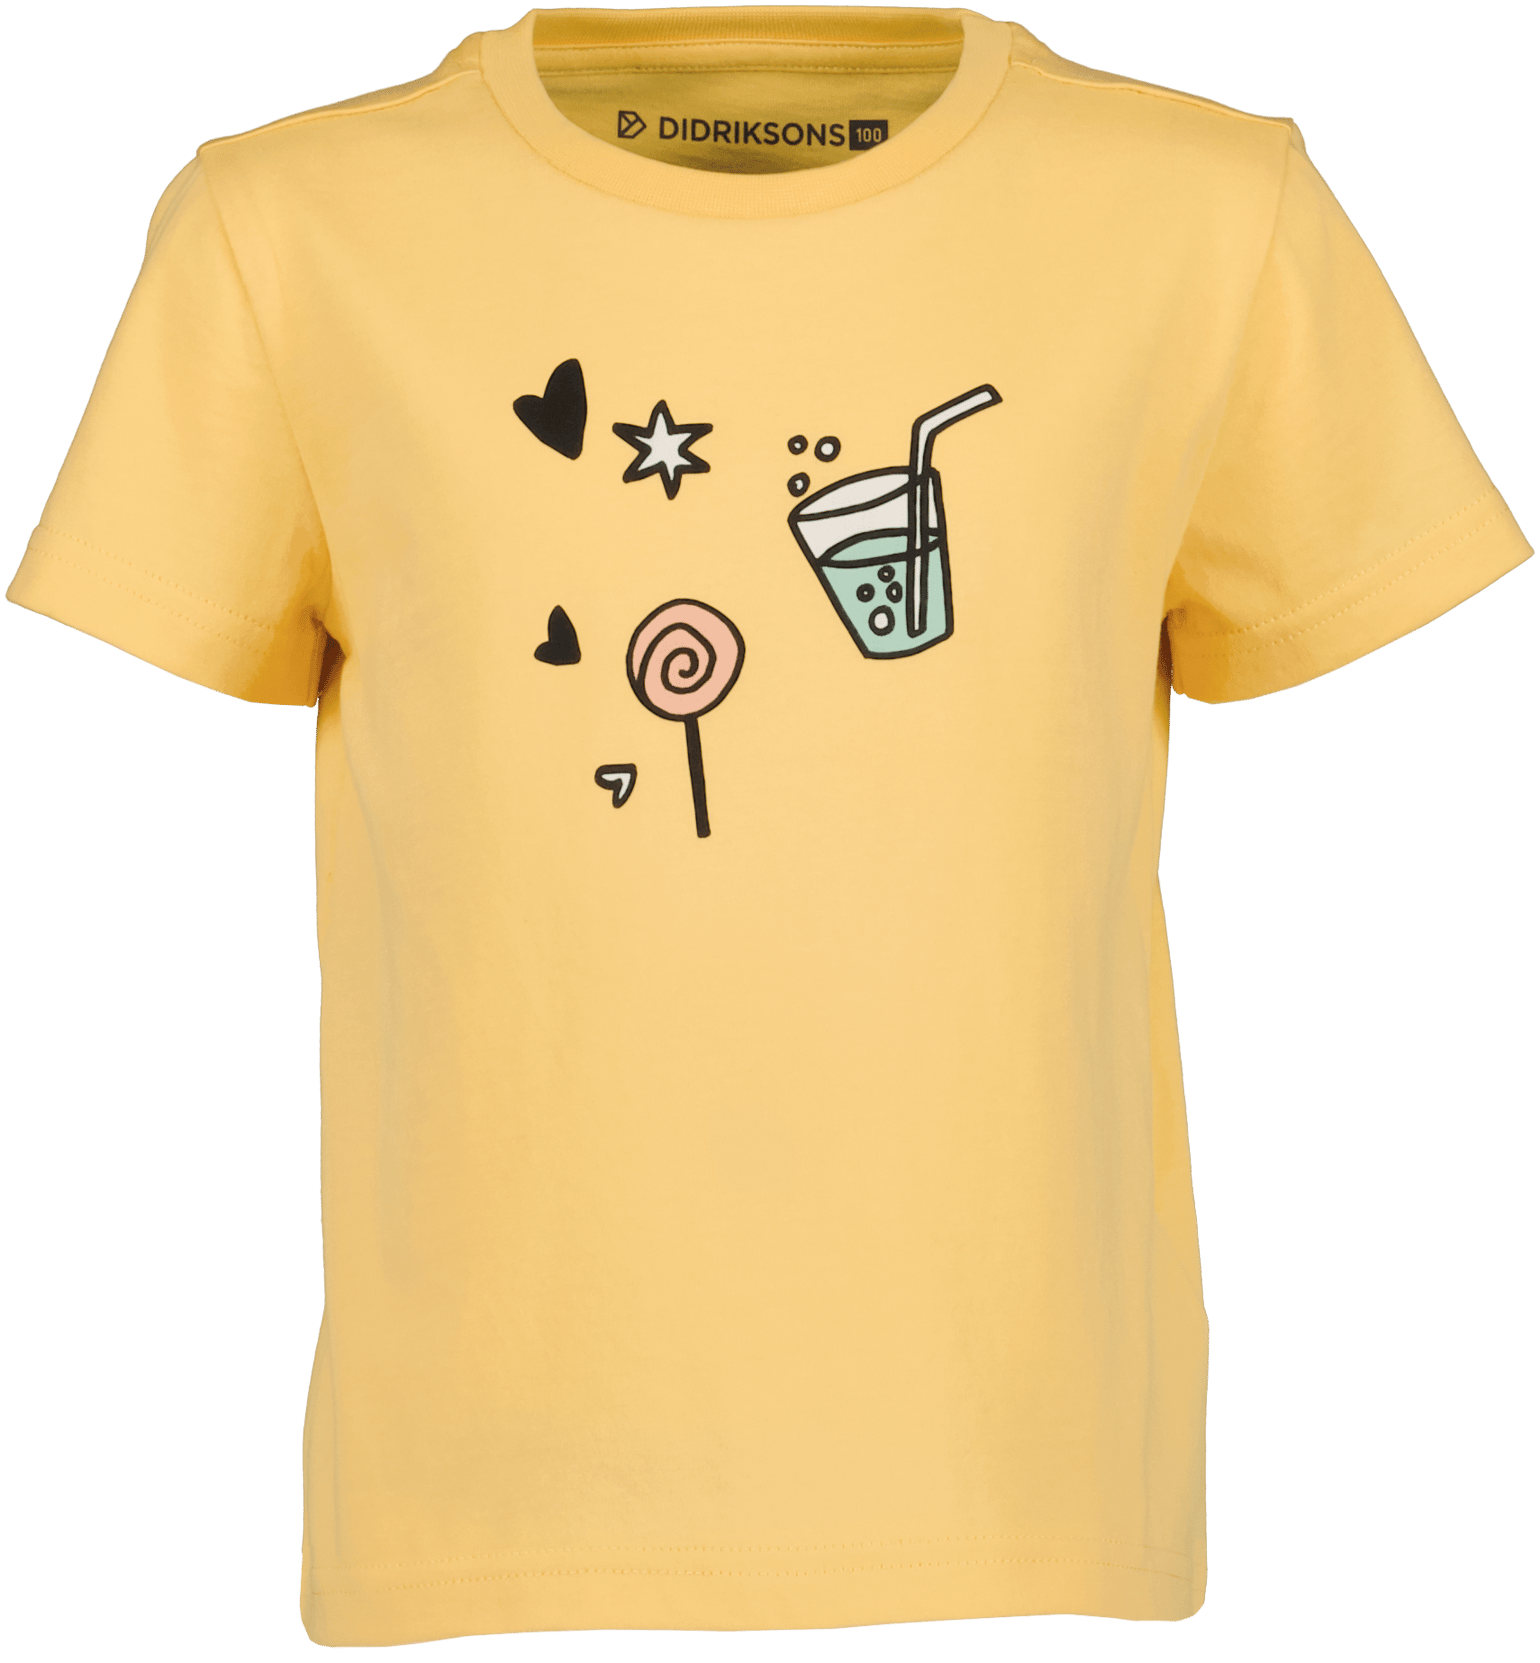 Didriksons Mynta Kids T-Shirt 2 Creamy Yellow